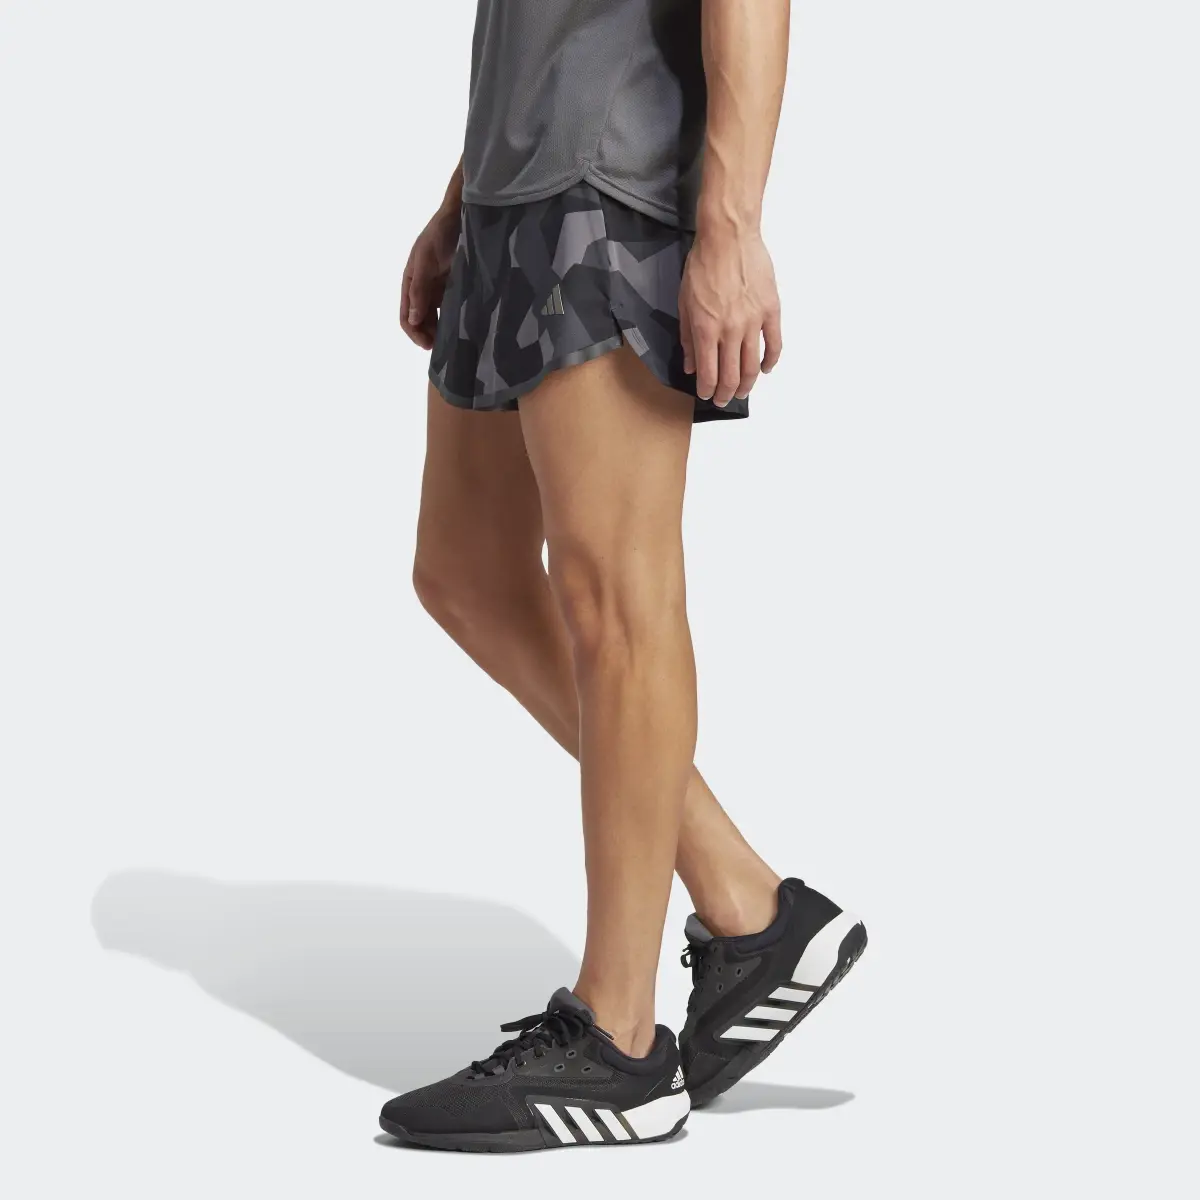 Adidas Shorts Designed for Training Pro Series Strength. 2